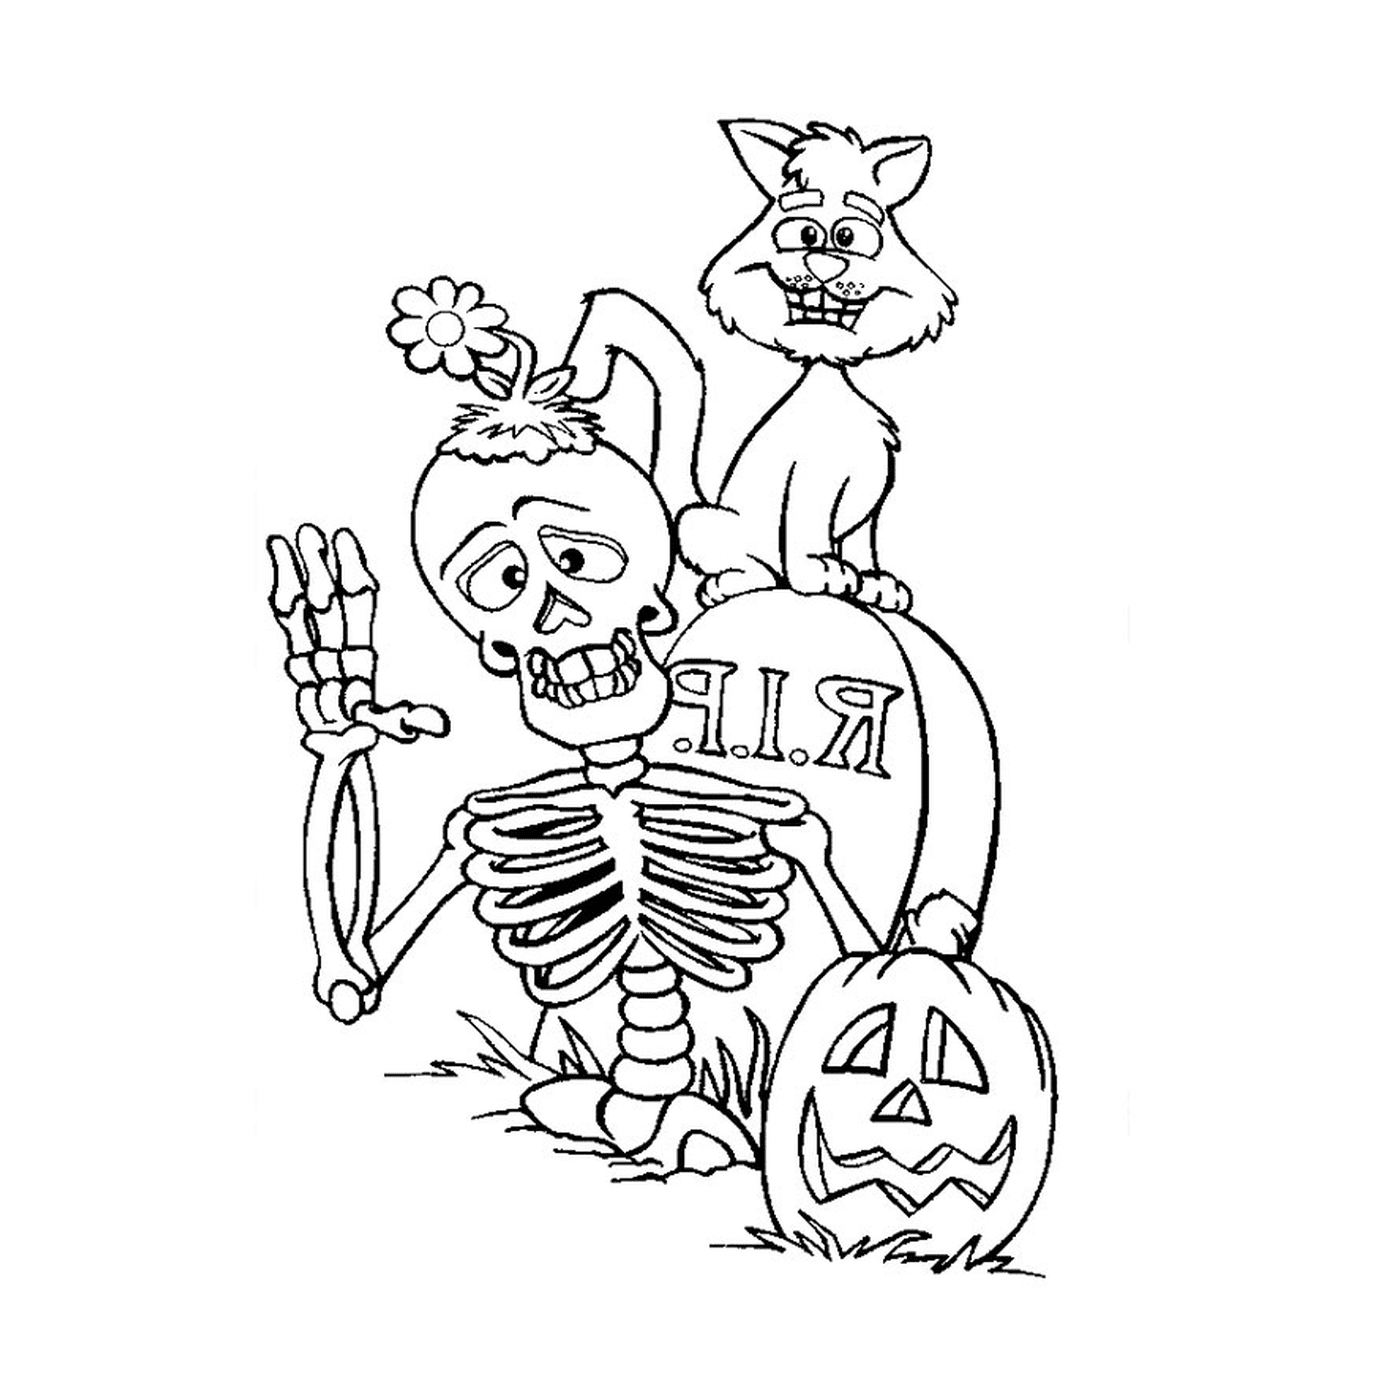  Scary skeleton with dog 